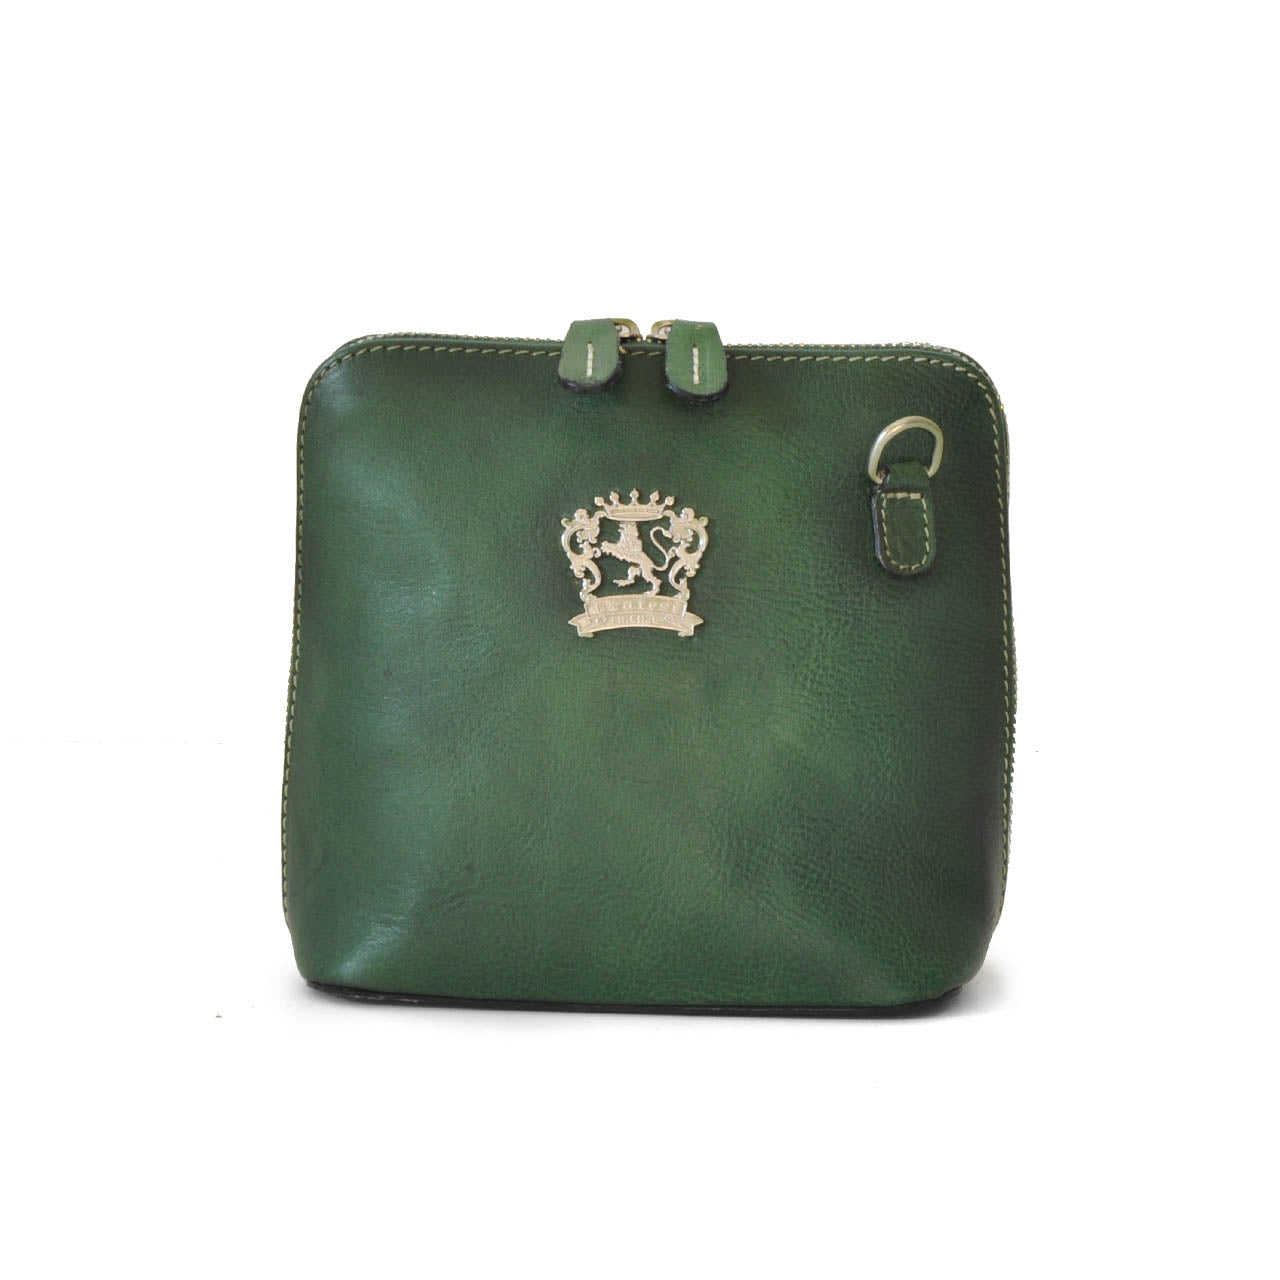 Pratesi Bag Volterra Bruce in genuine Italian leather - Vegetable Tanned Italian Leather Emerald